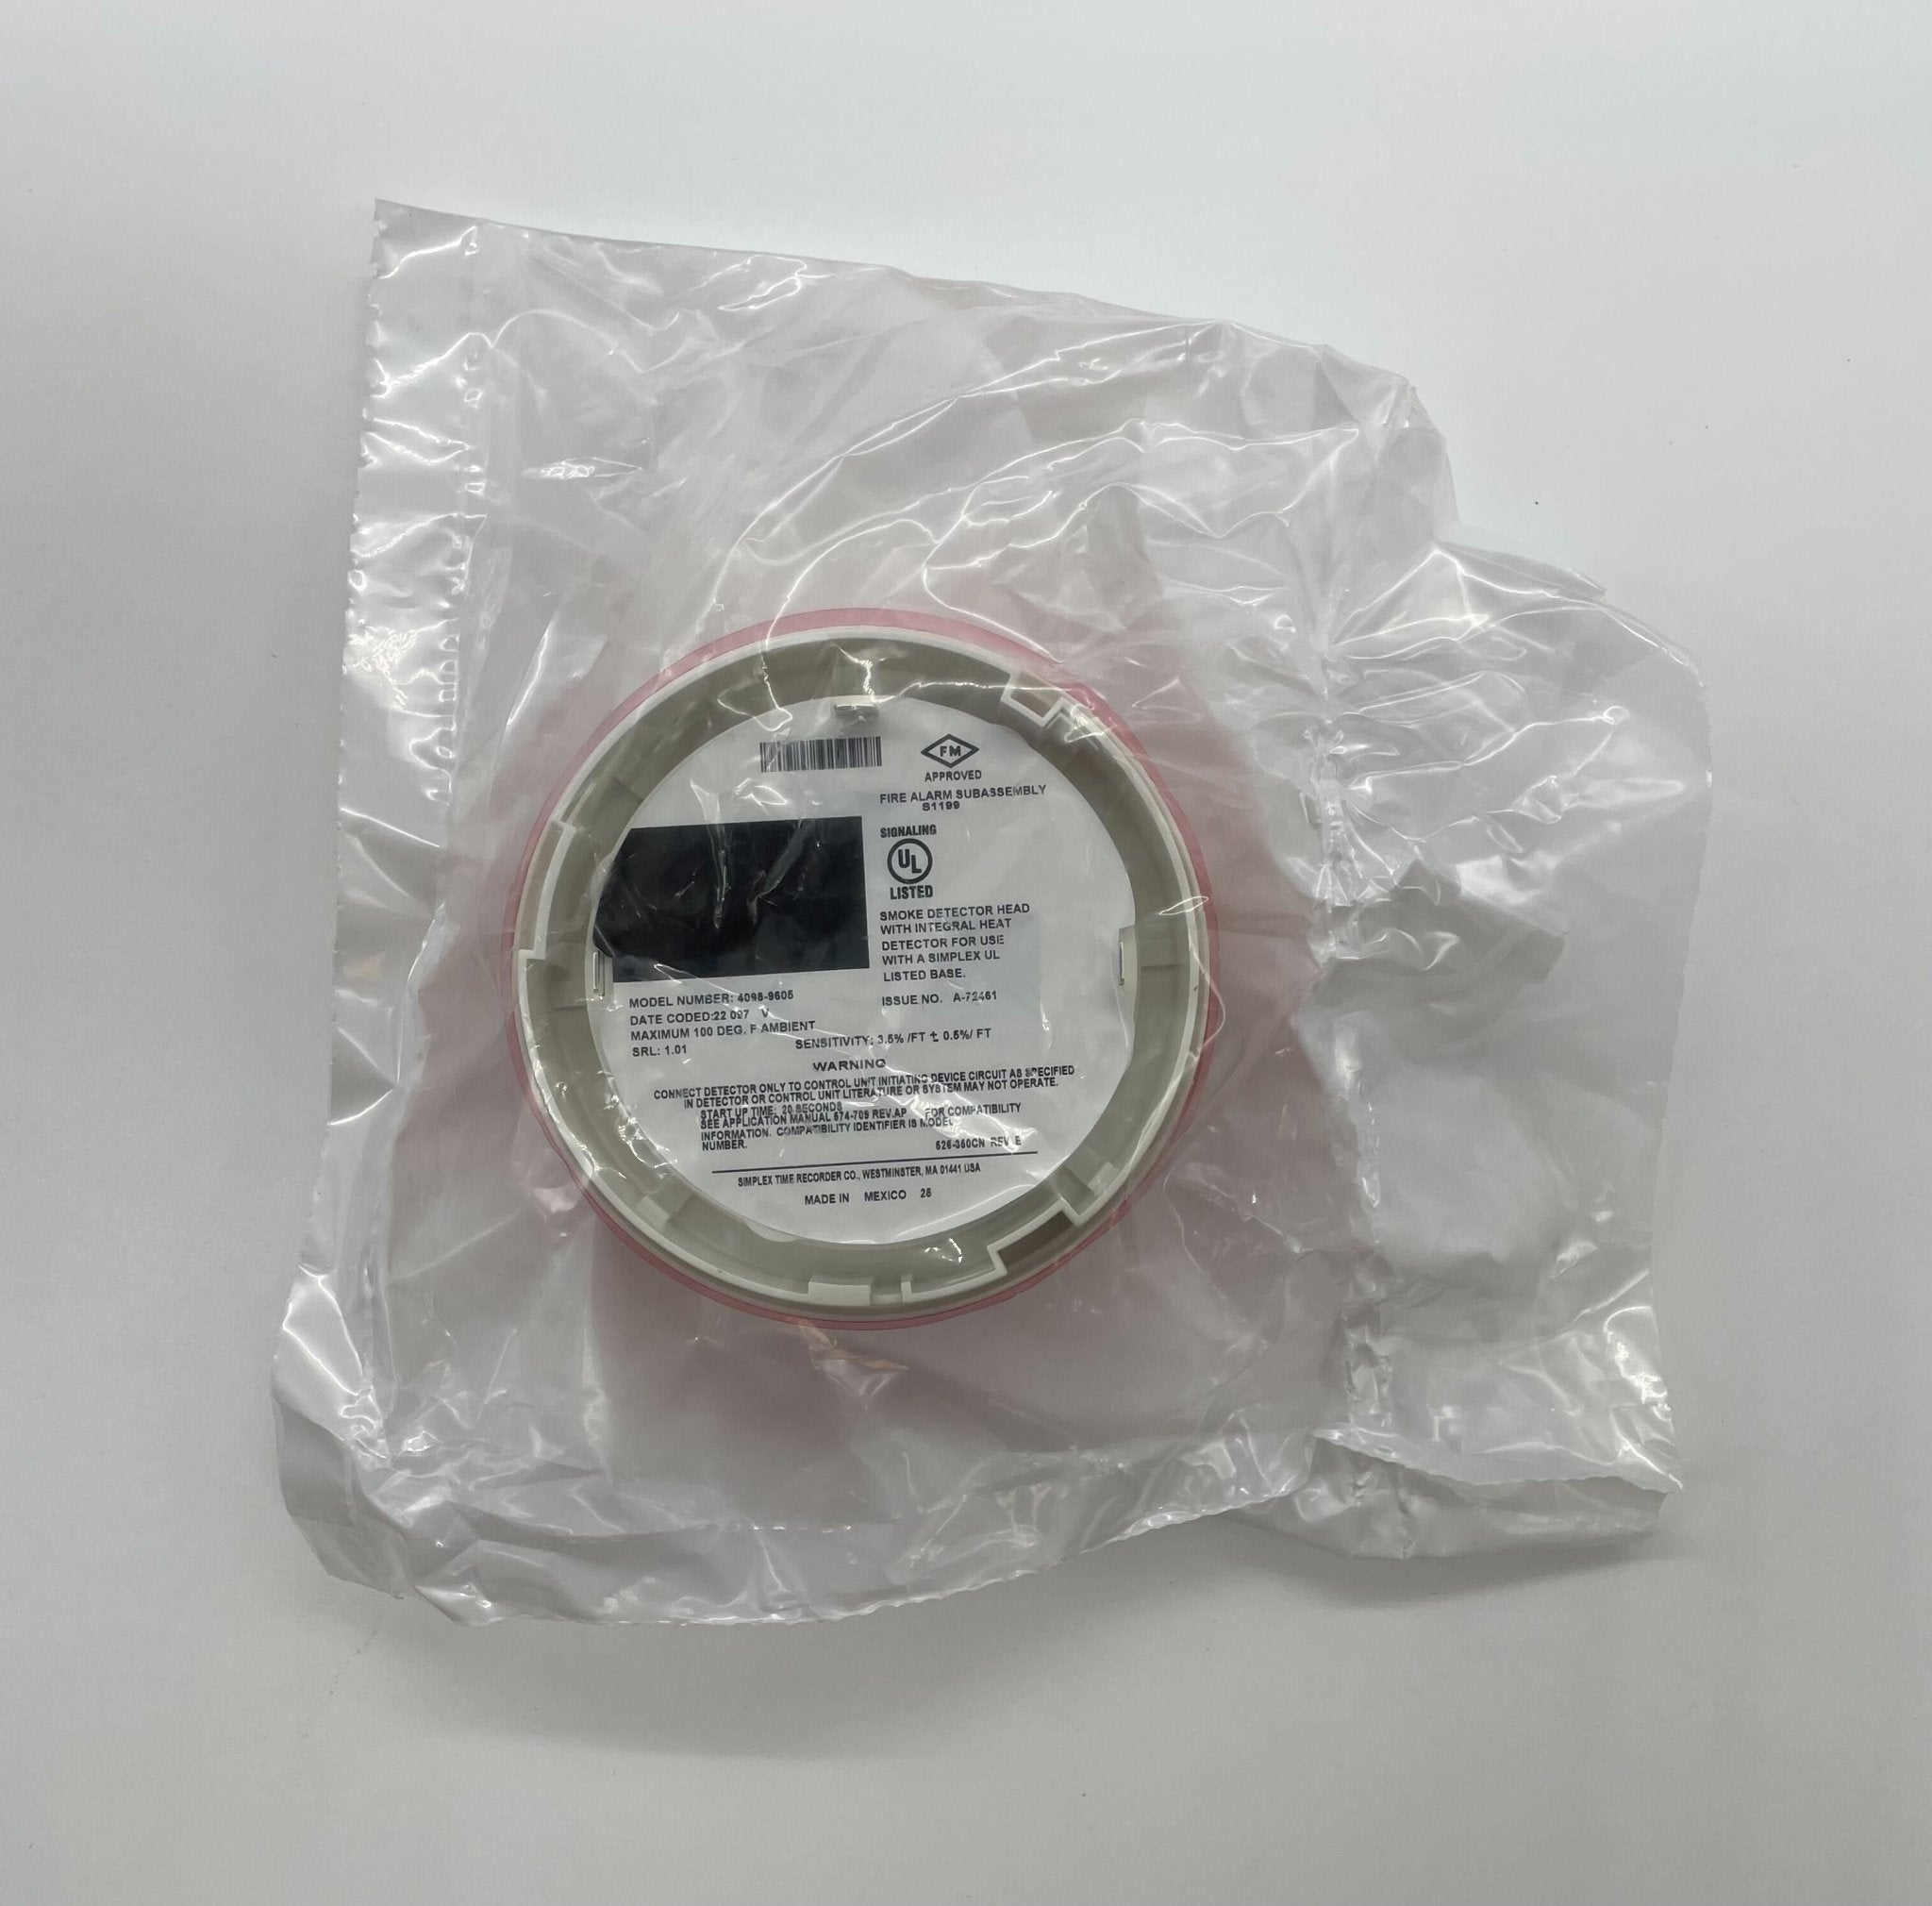 Simplex 4098-9605 TrueAlarm Photoelectric Detector - The Fire Alarm Supplier